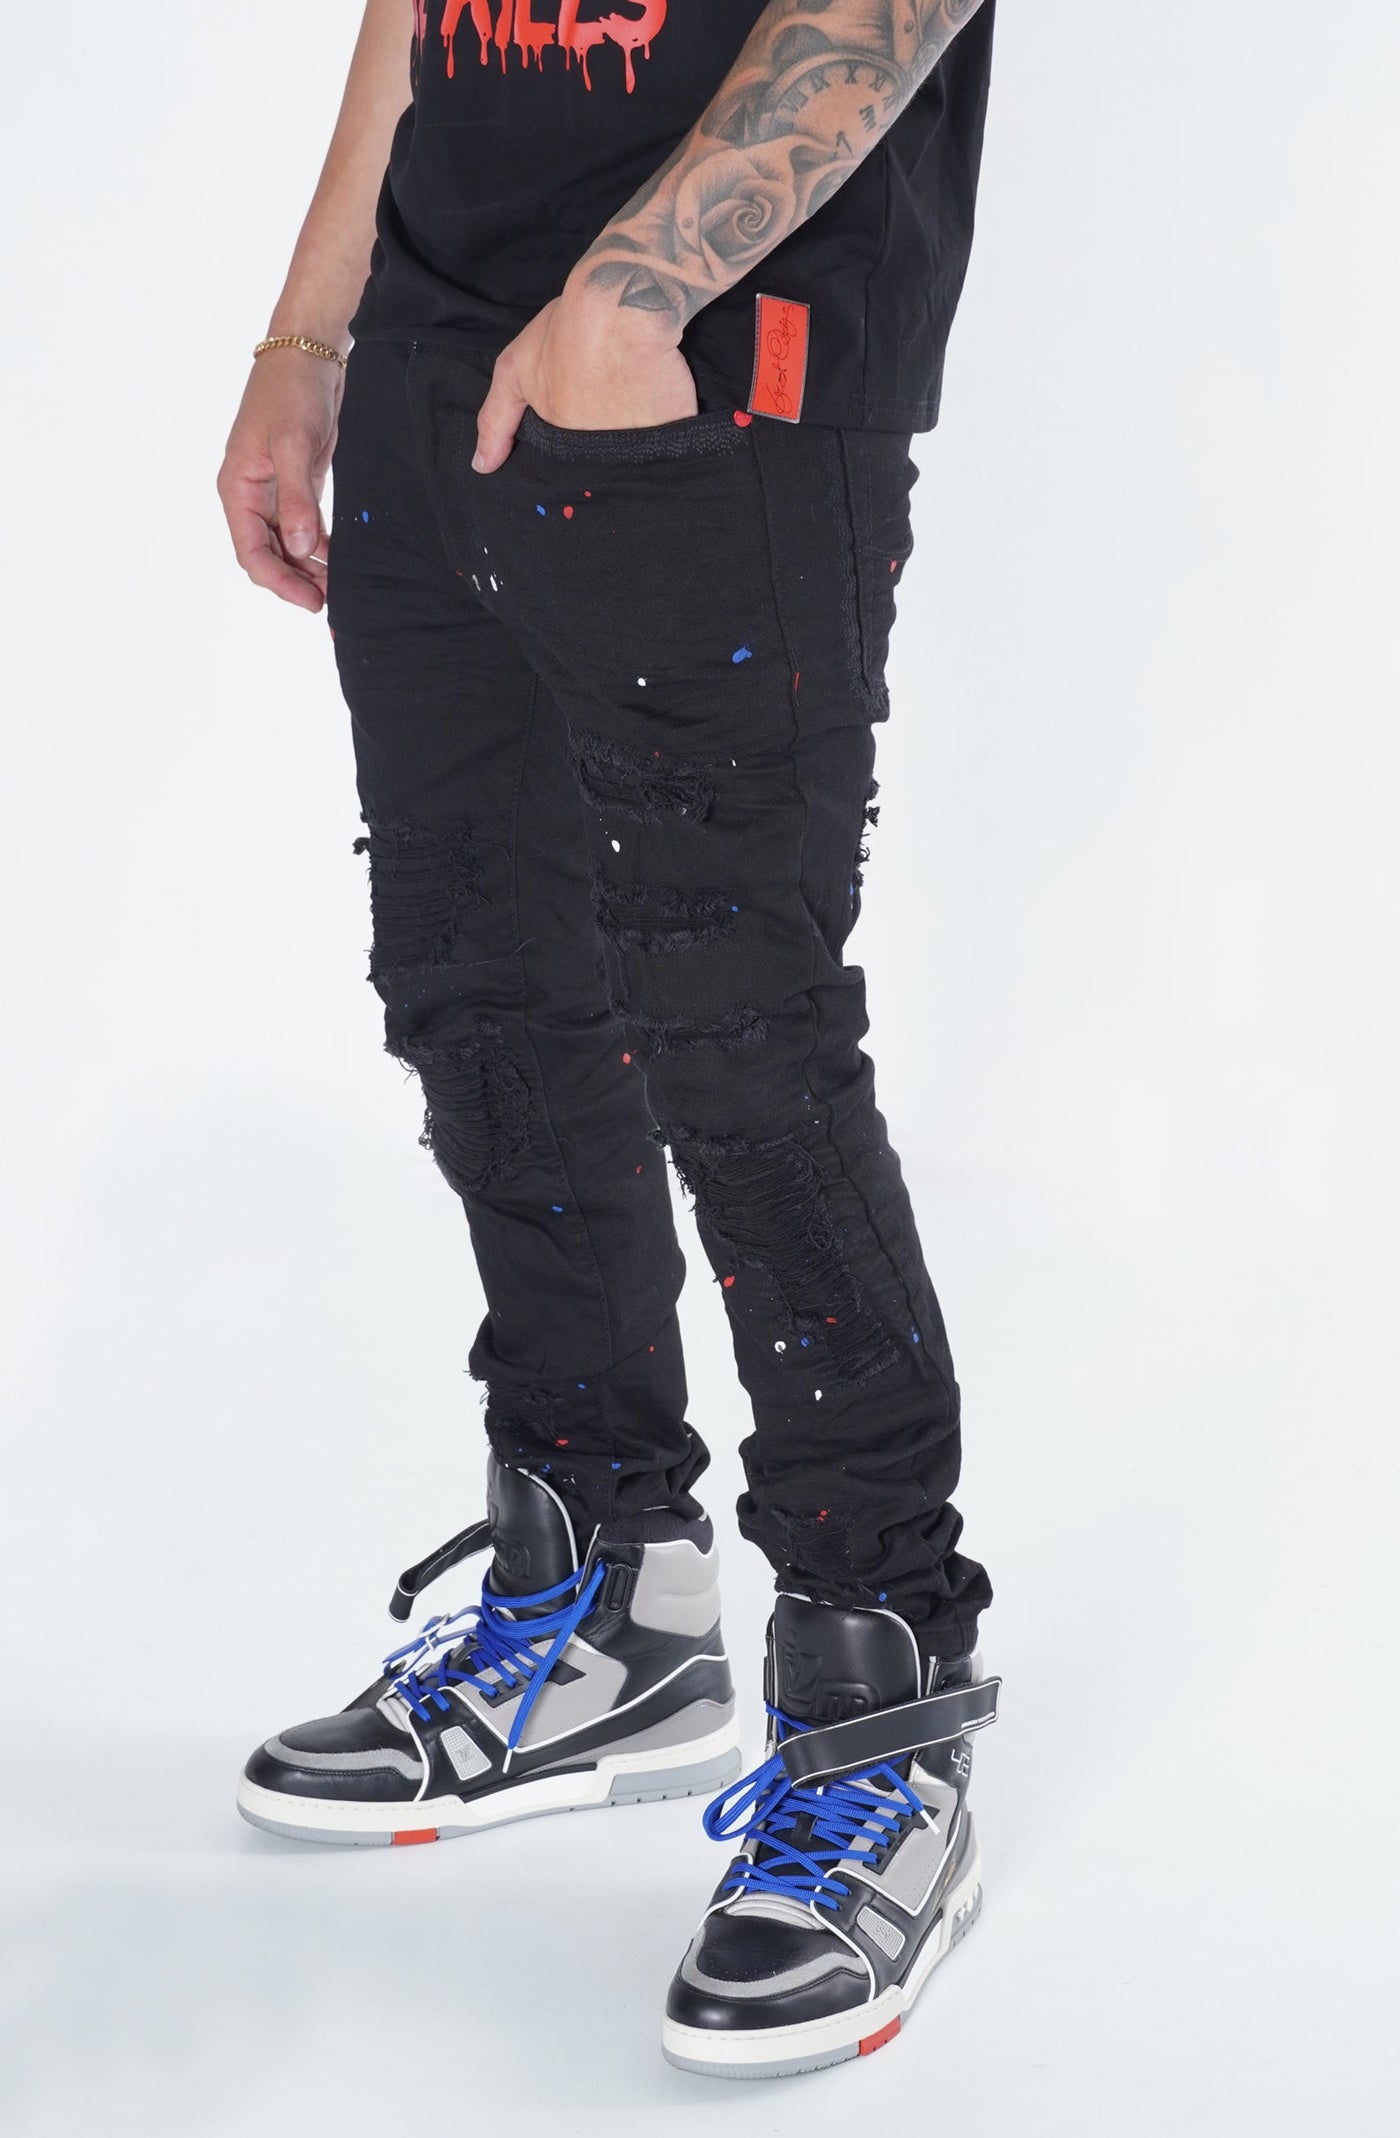 F1778  Frost Shredded Jeans w/ paint - Black